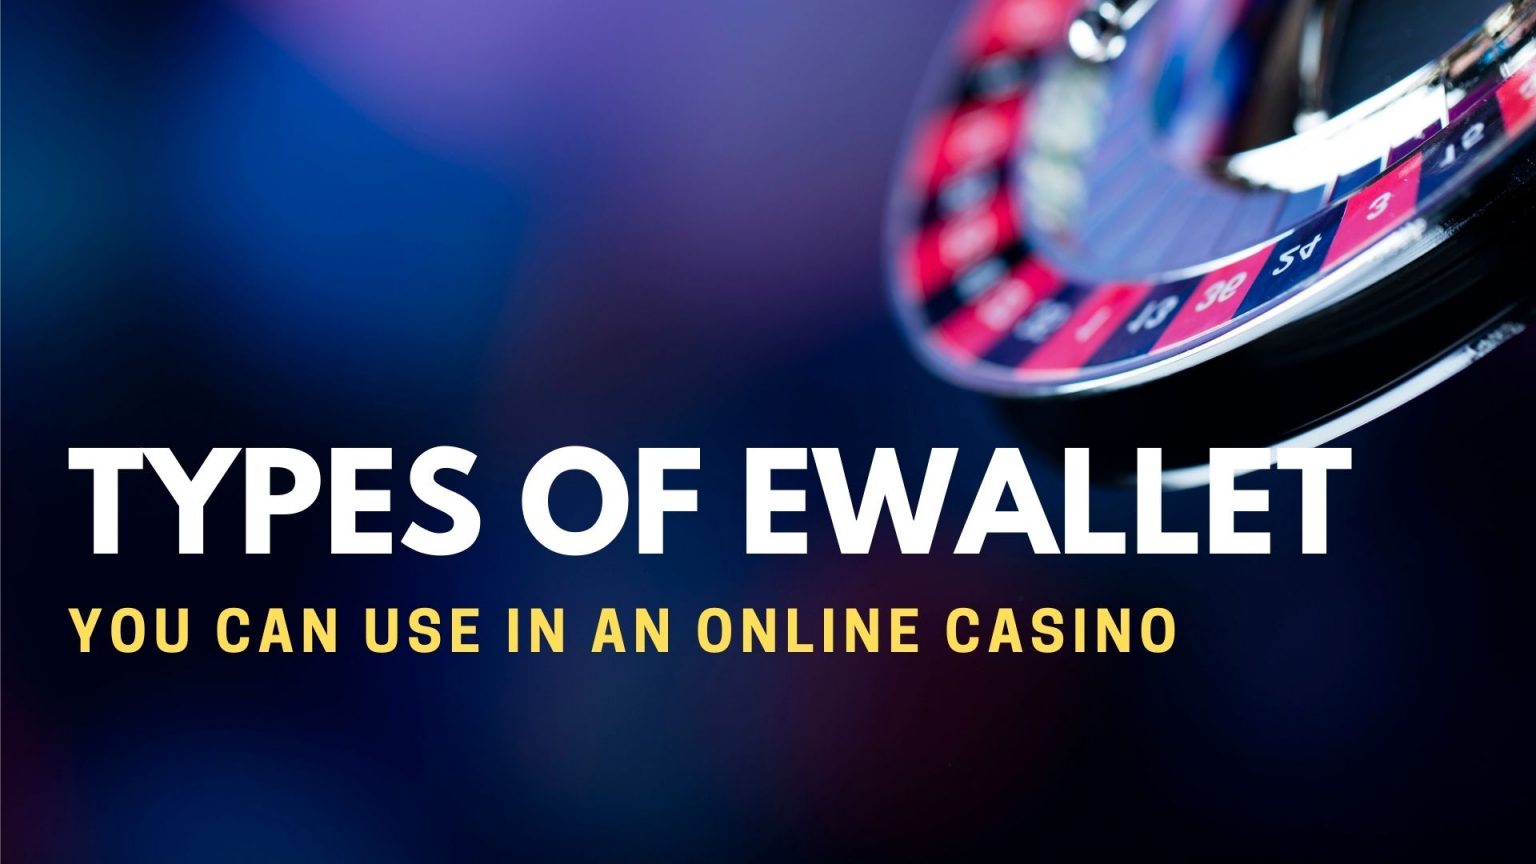 ewallet online casinos